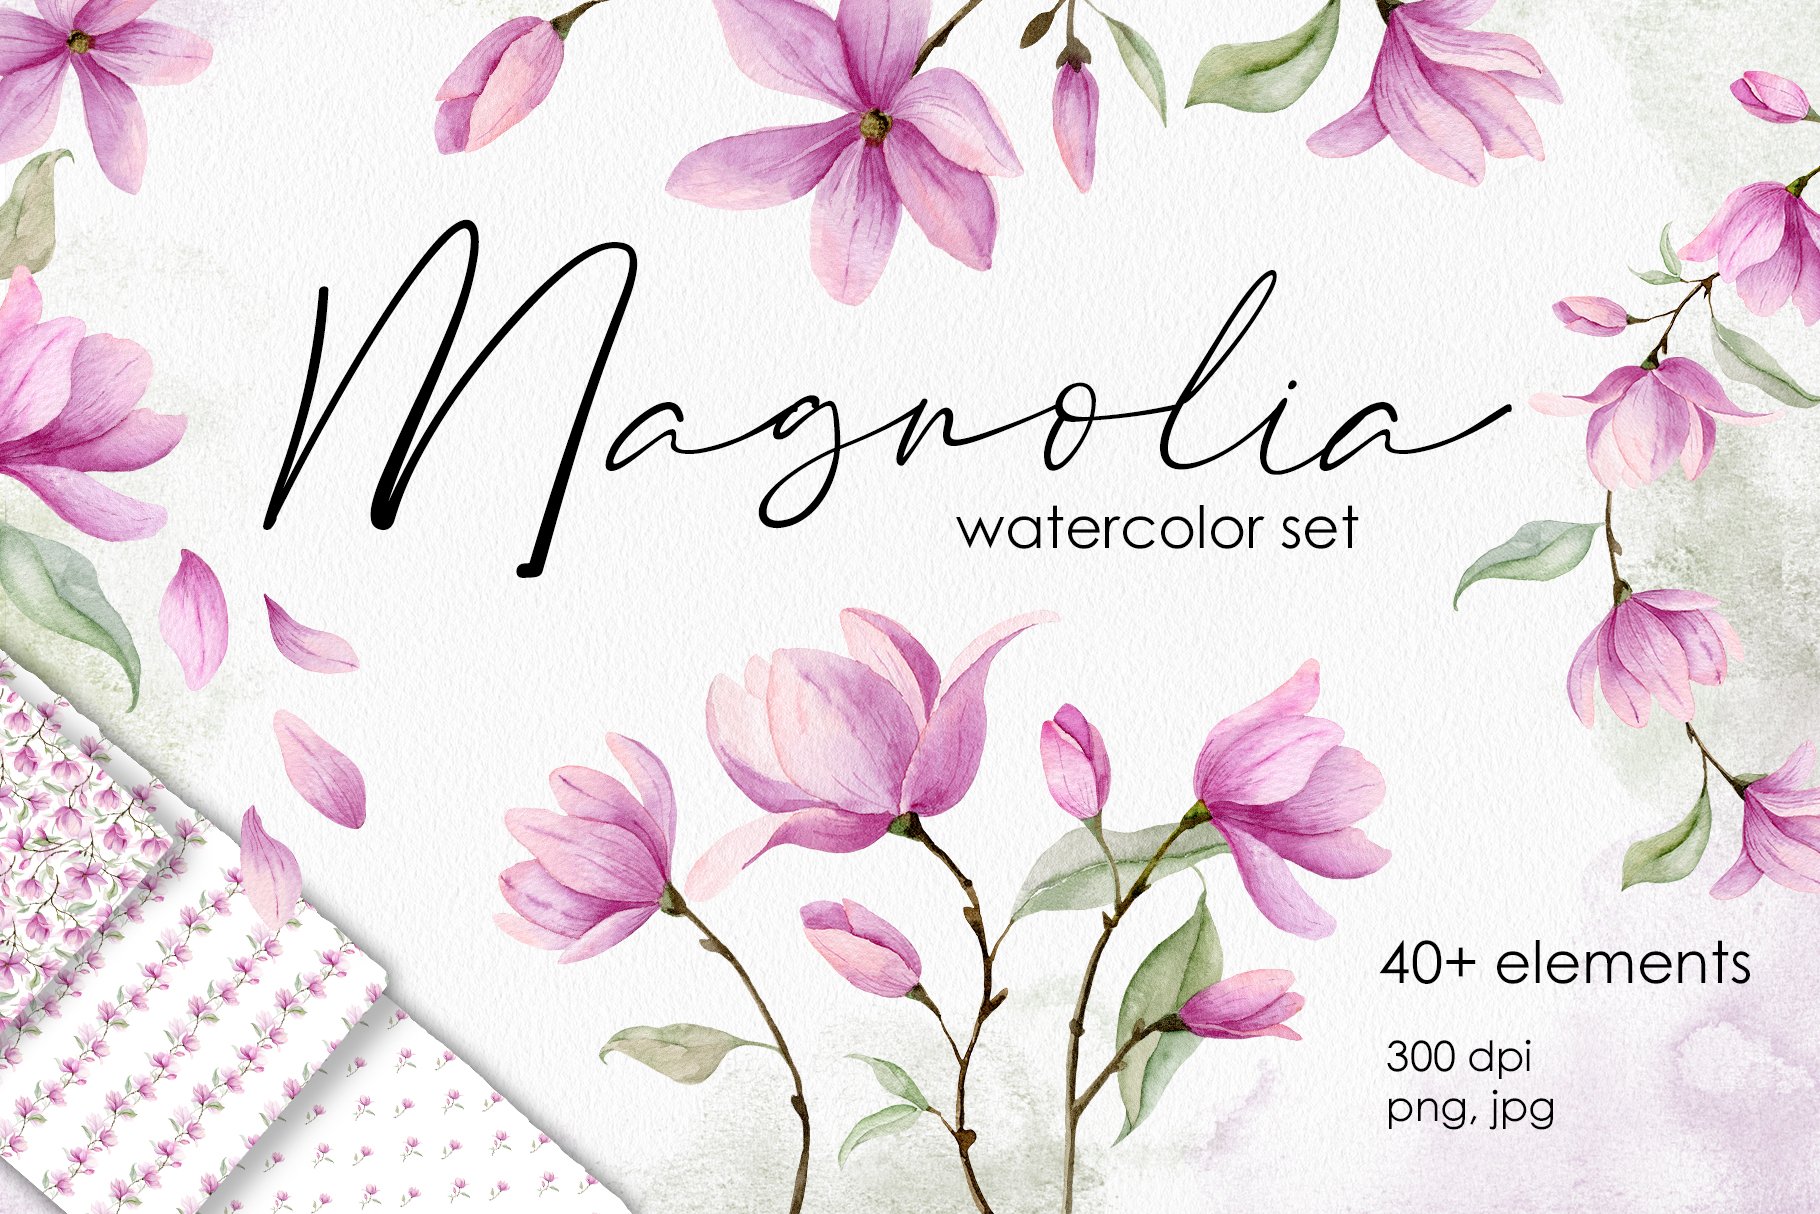 vector magnolia clipart